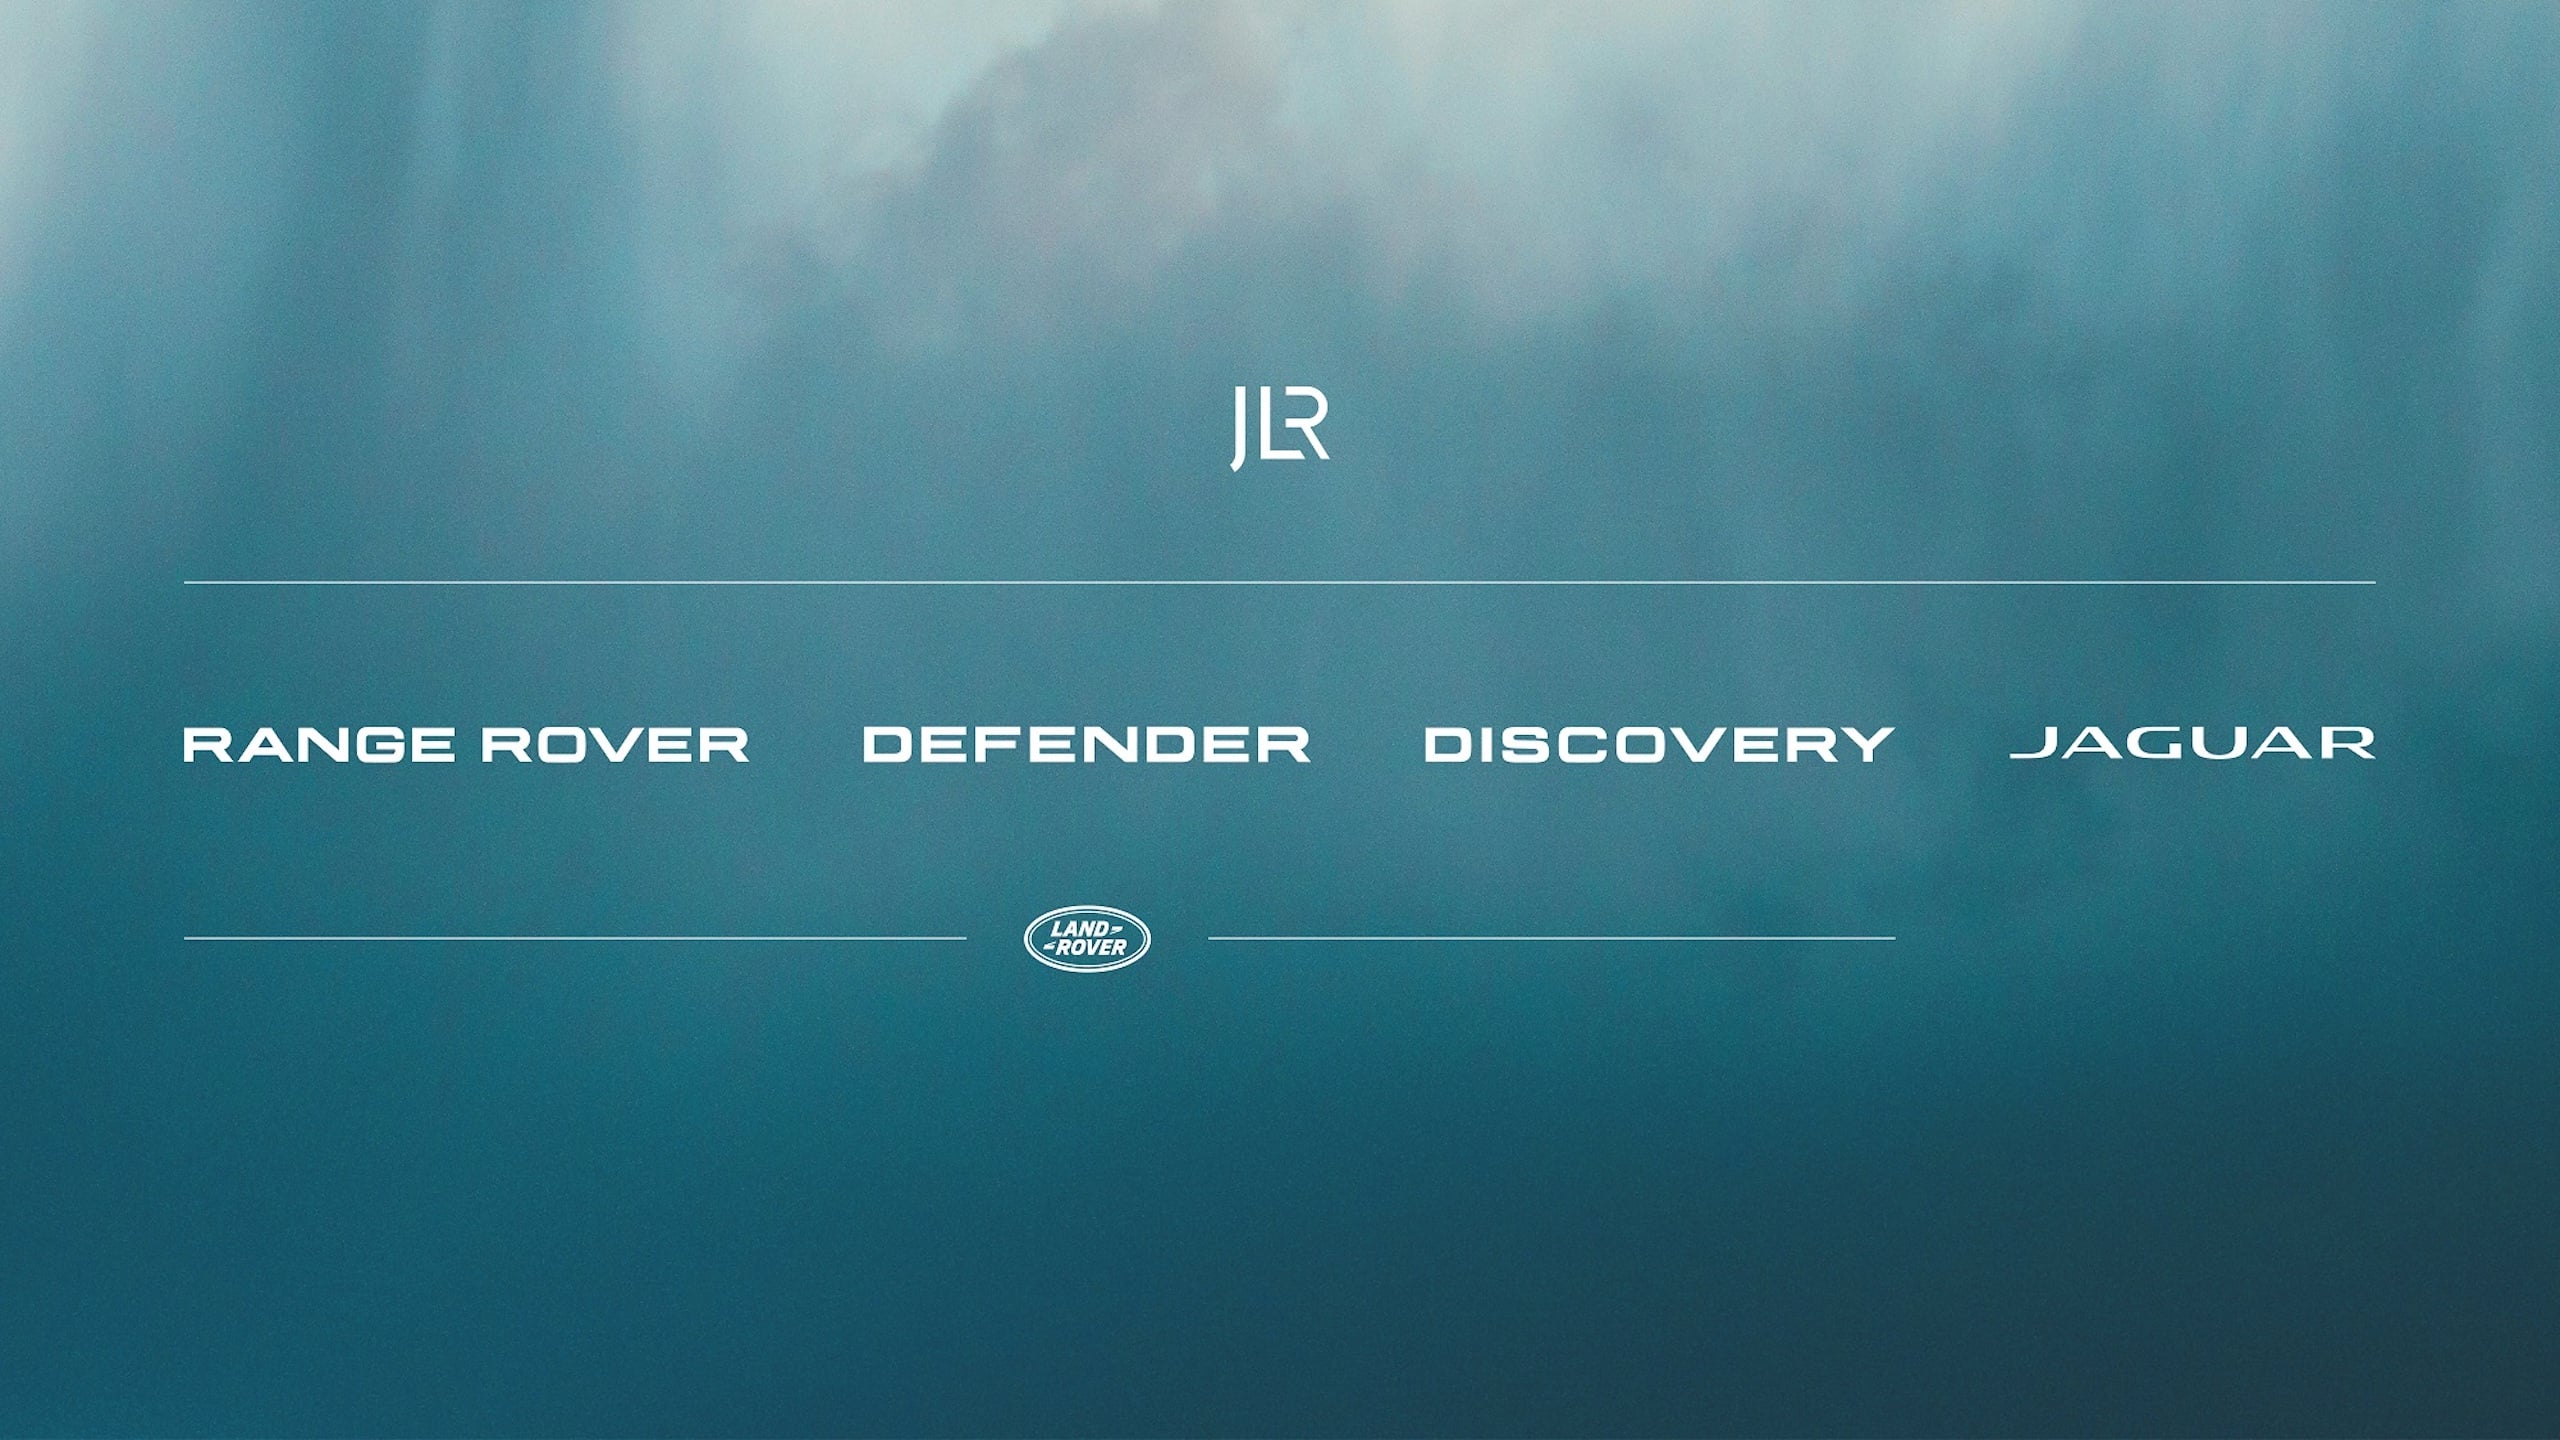  JLR Corporate Identity poster